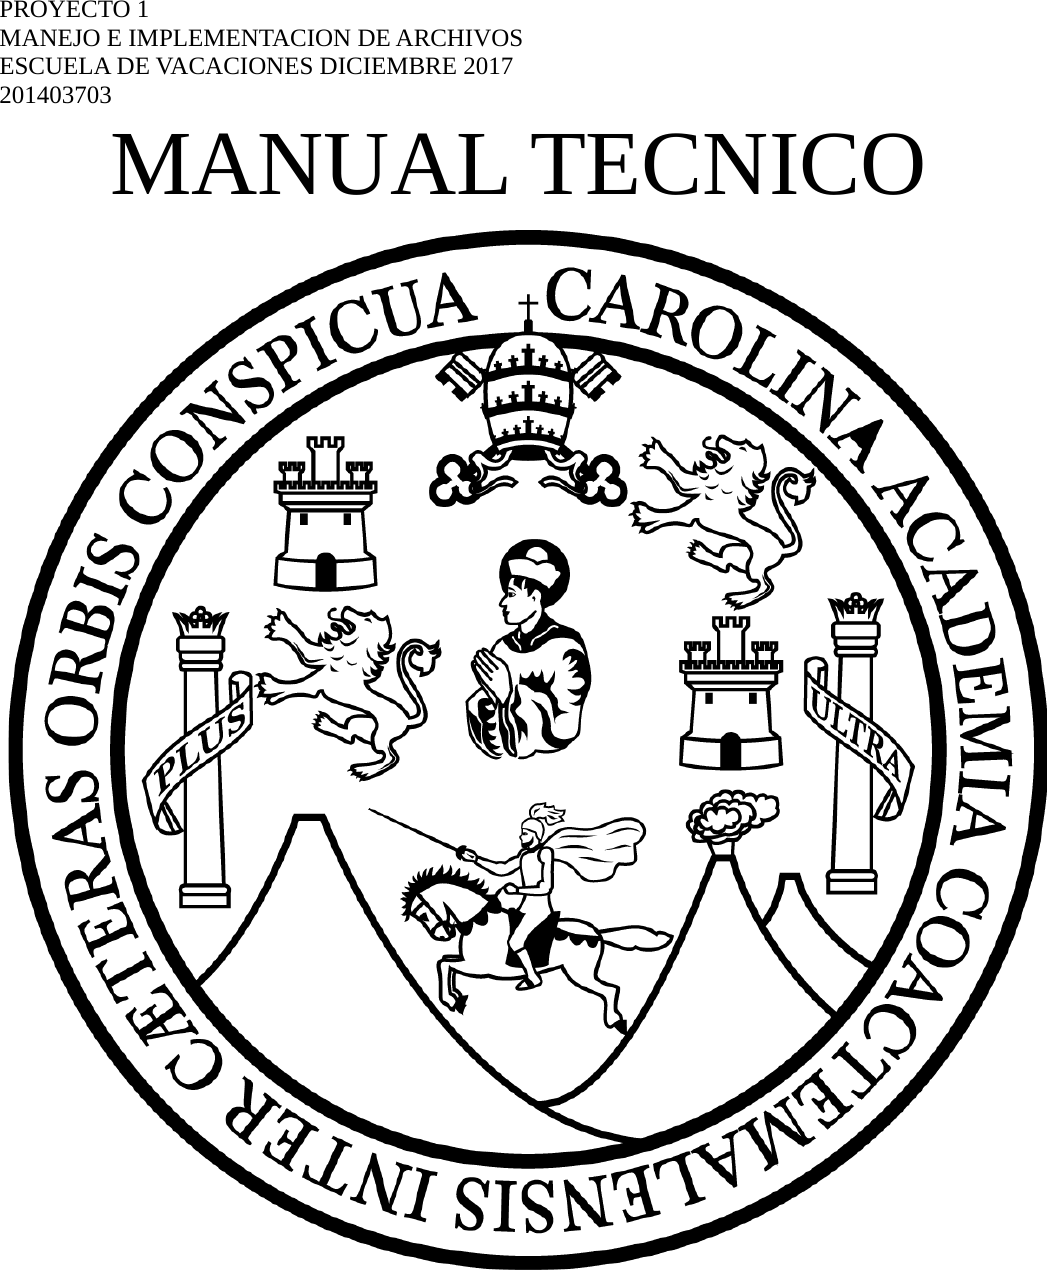 Page 1 of 4 - Manual Tecnico